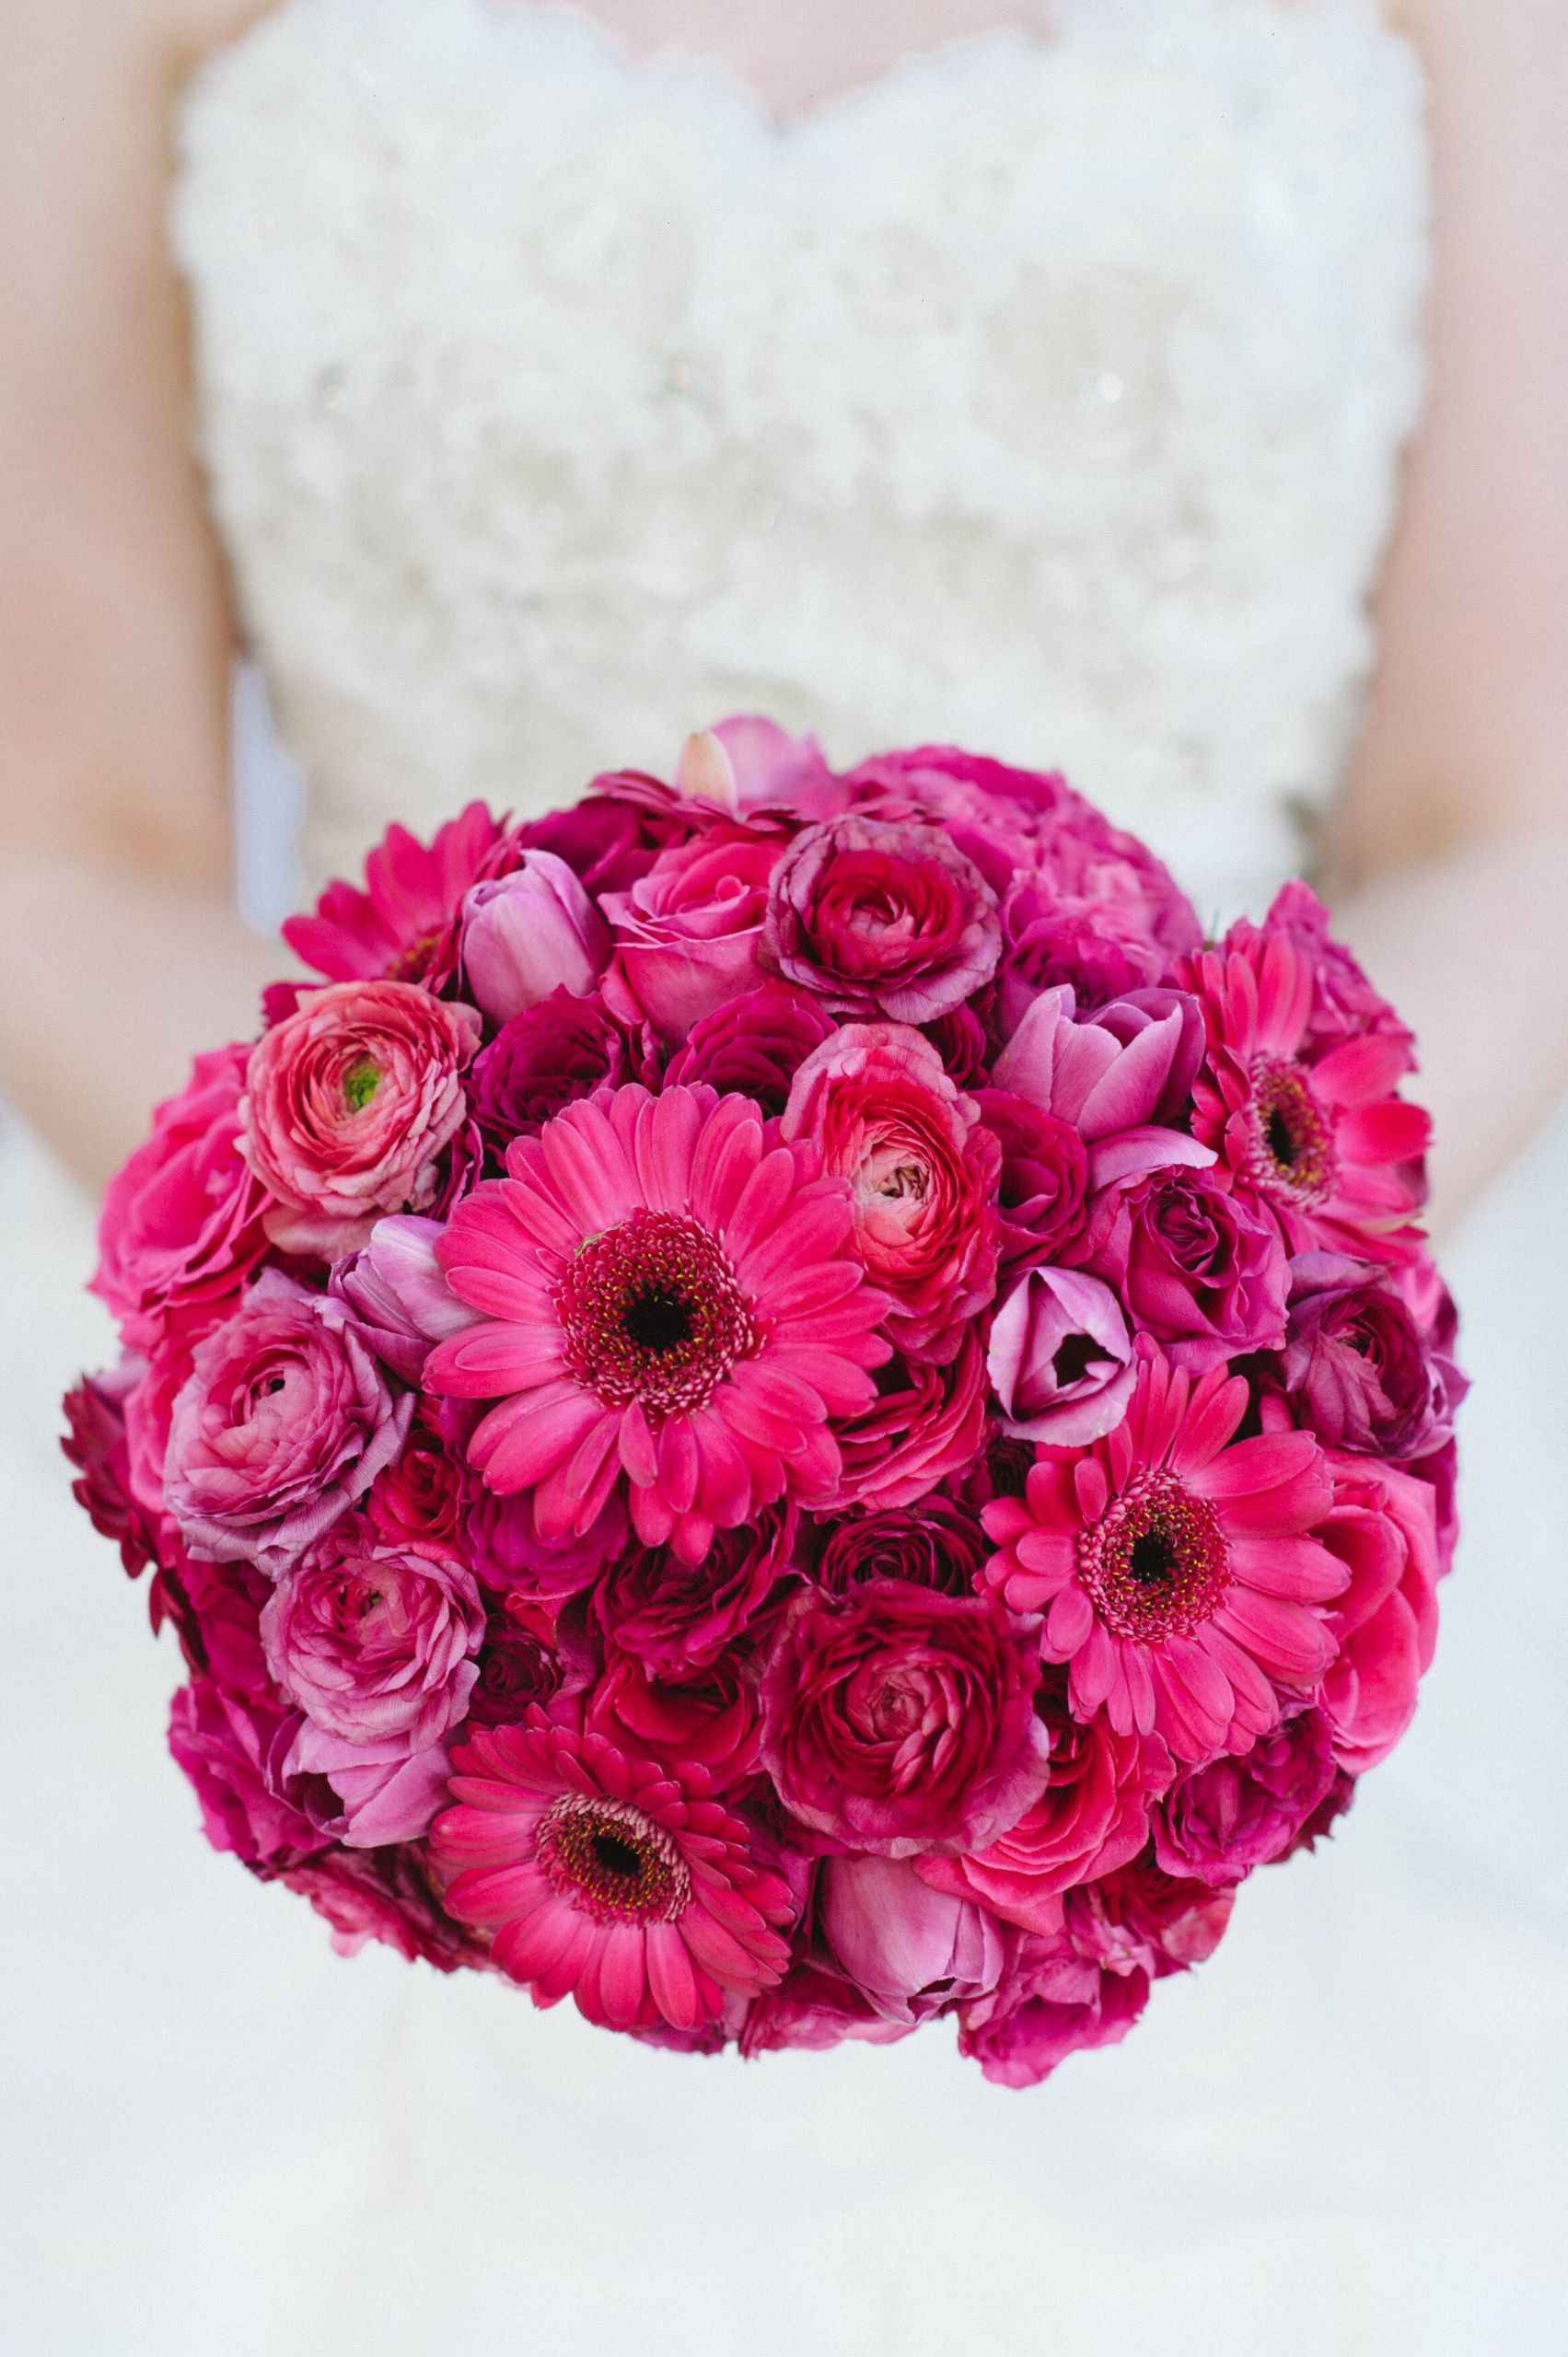 Hot Pink Wedding Flowers
 A Hot Pink Gerbera Daisy and Tulip Bridal Bouquet